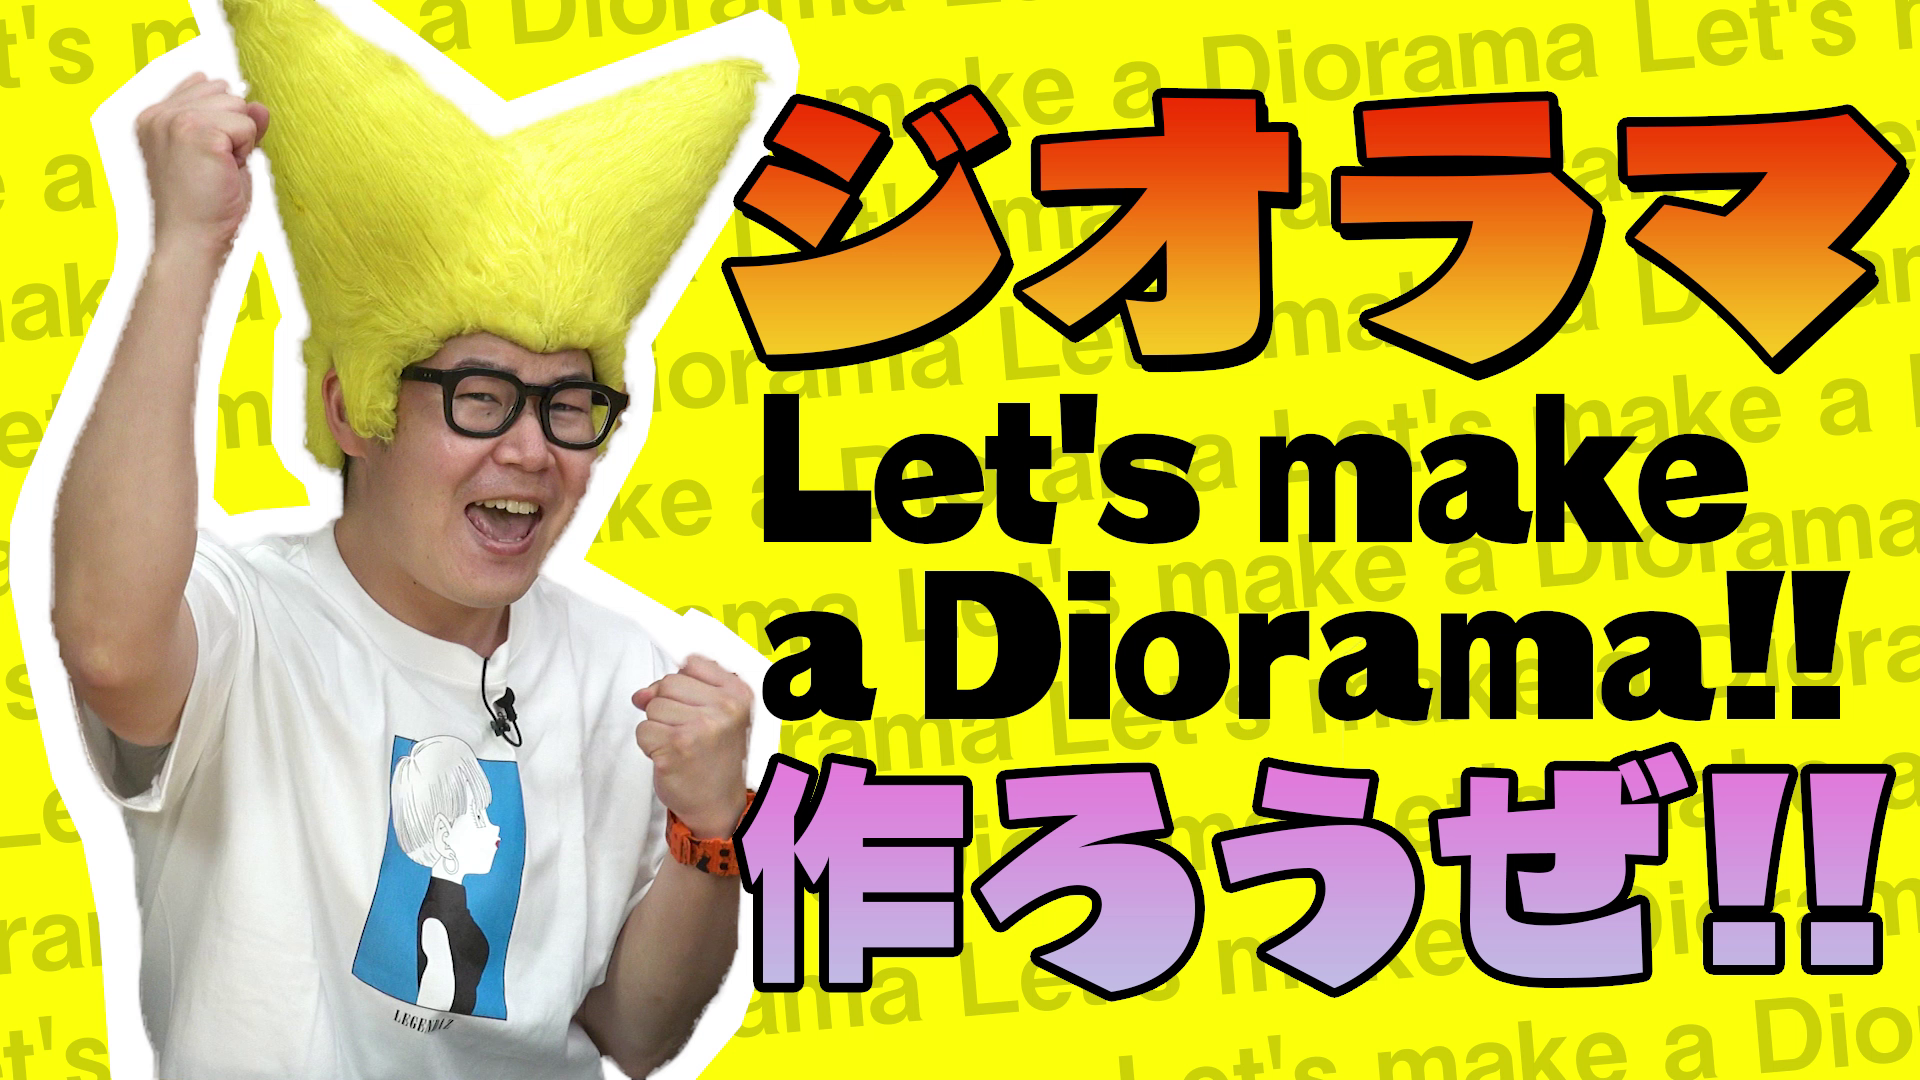 Let's make a Diorama!